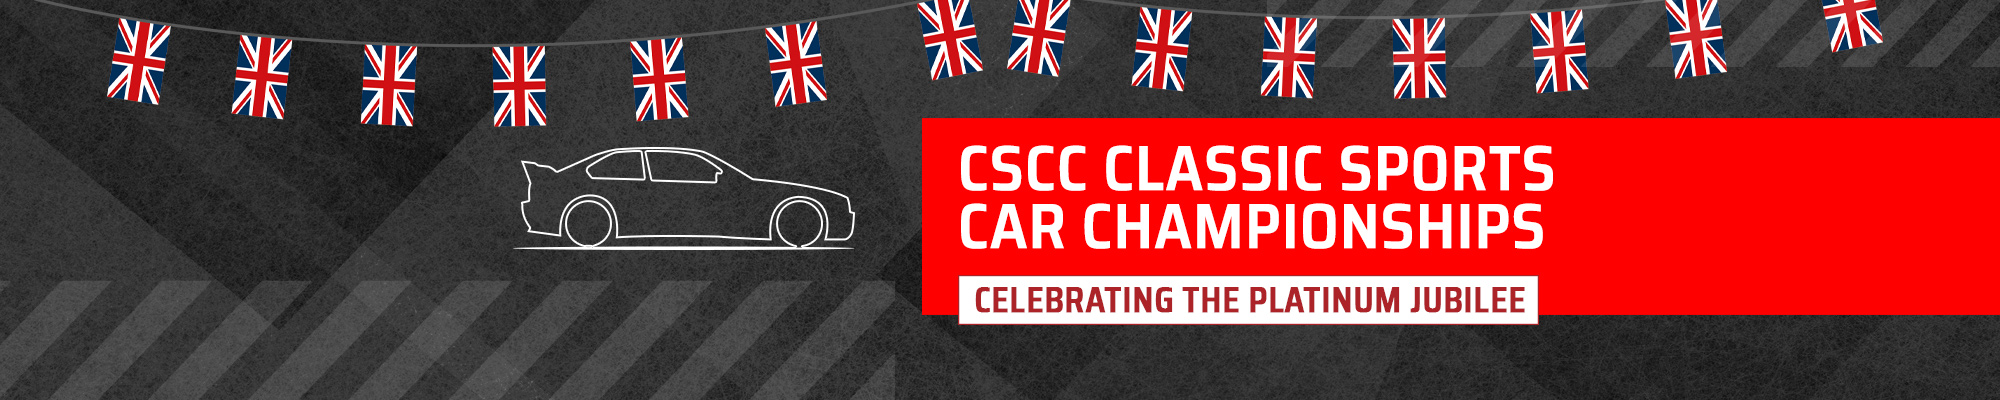 CSCC Classic Sports Car Championships - Celebrating the Platinum Jubilee